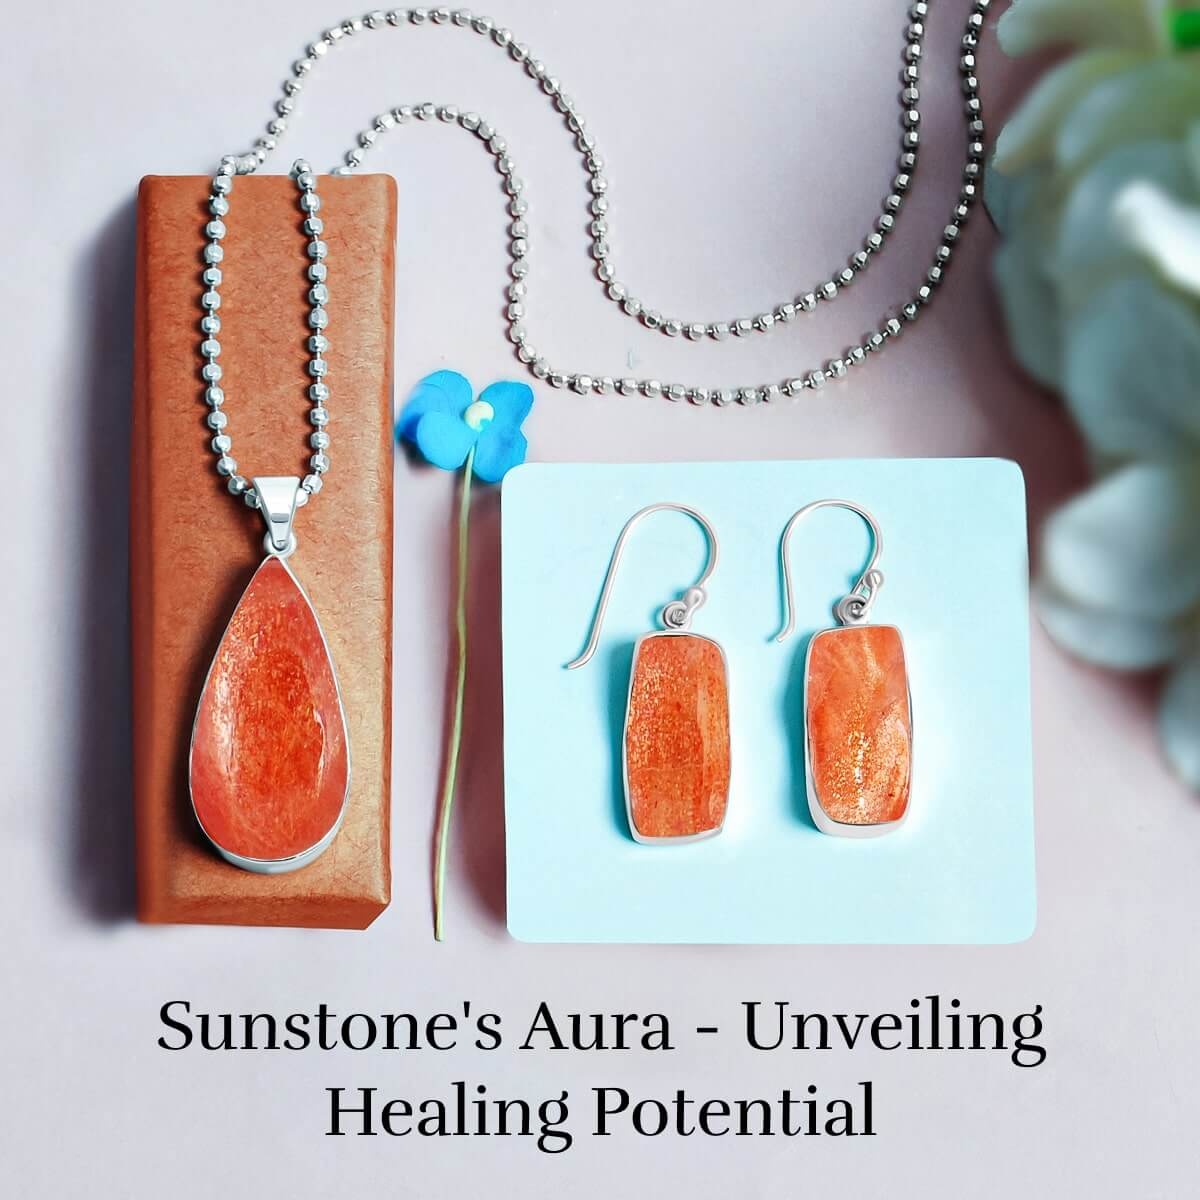 Sunstone Gemstone Healing properties